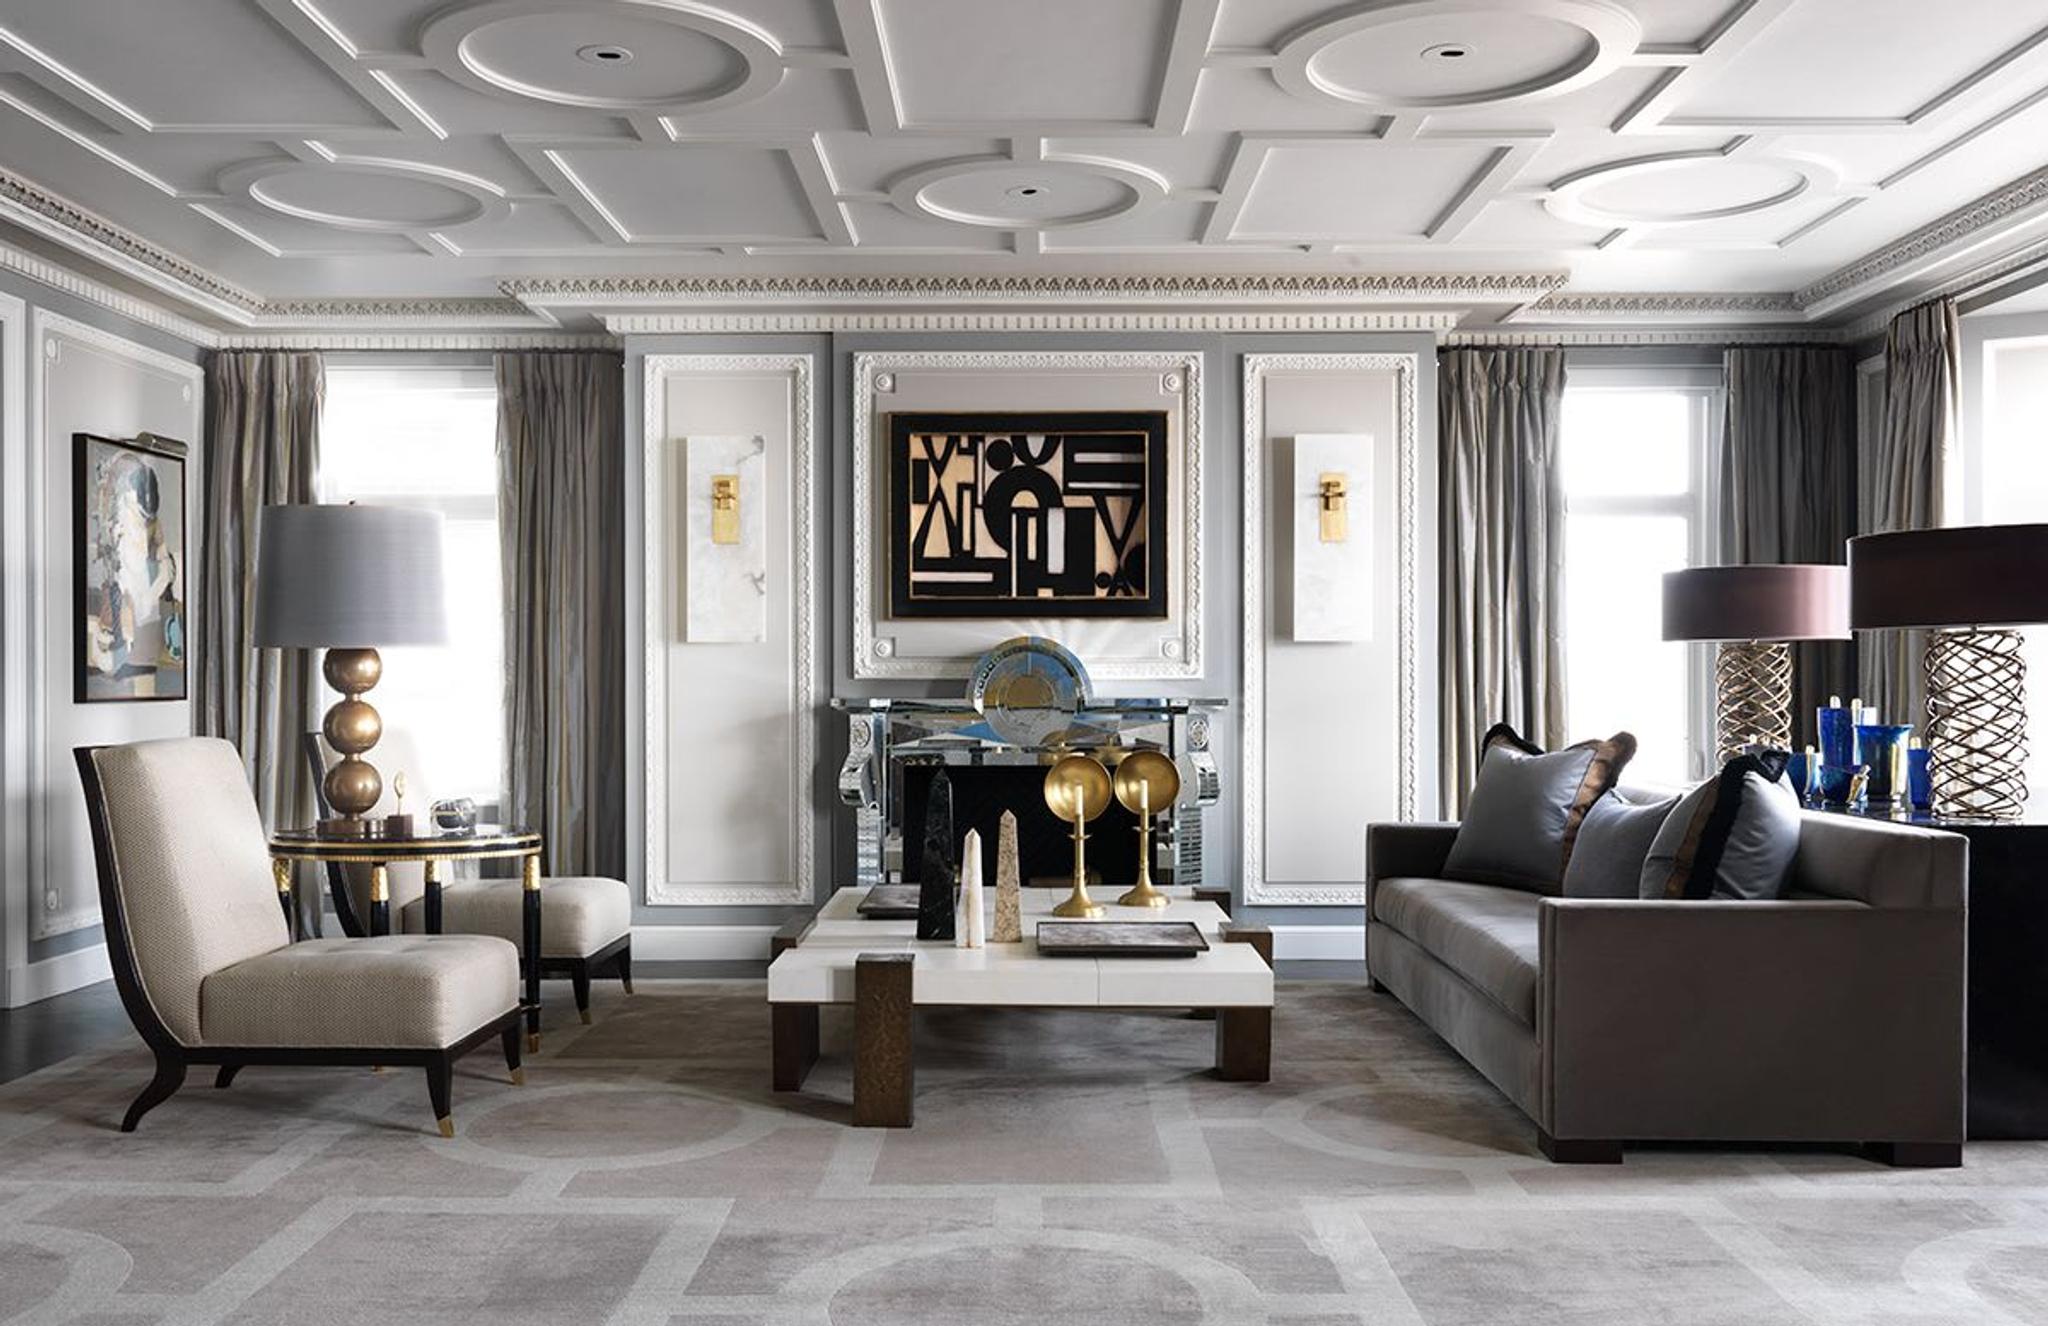 Chicago apartment lounge by interior designer Jean-Louis Deniot. Photo by Jonny Valiant